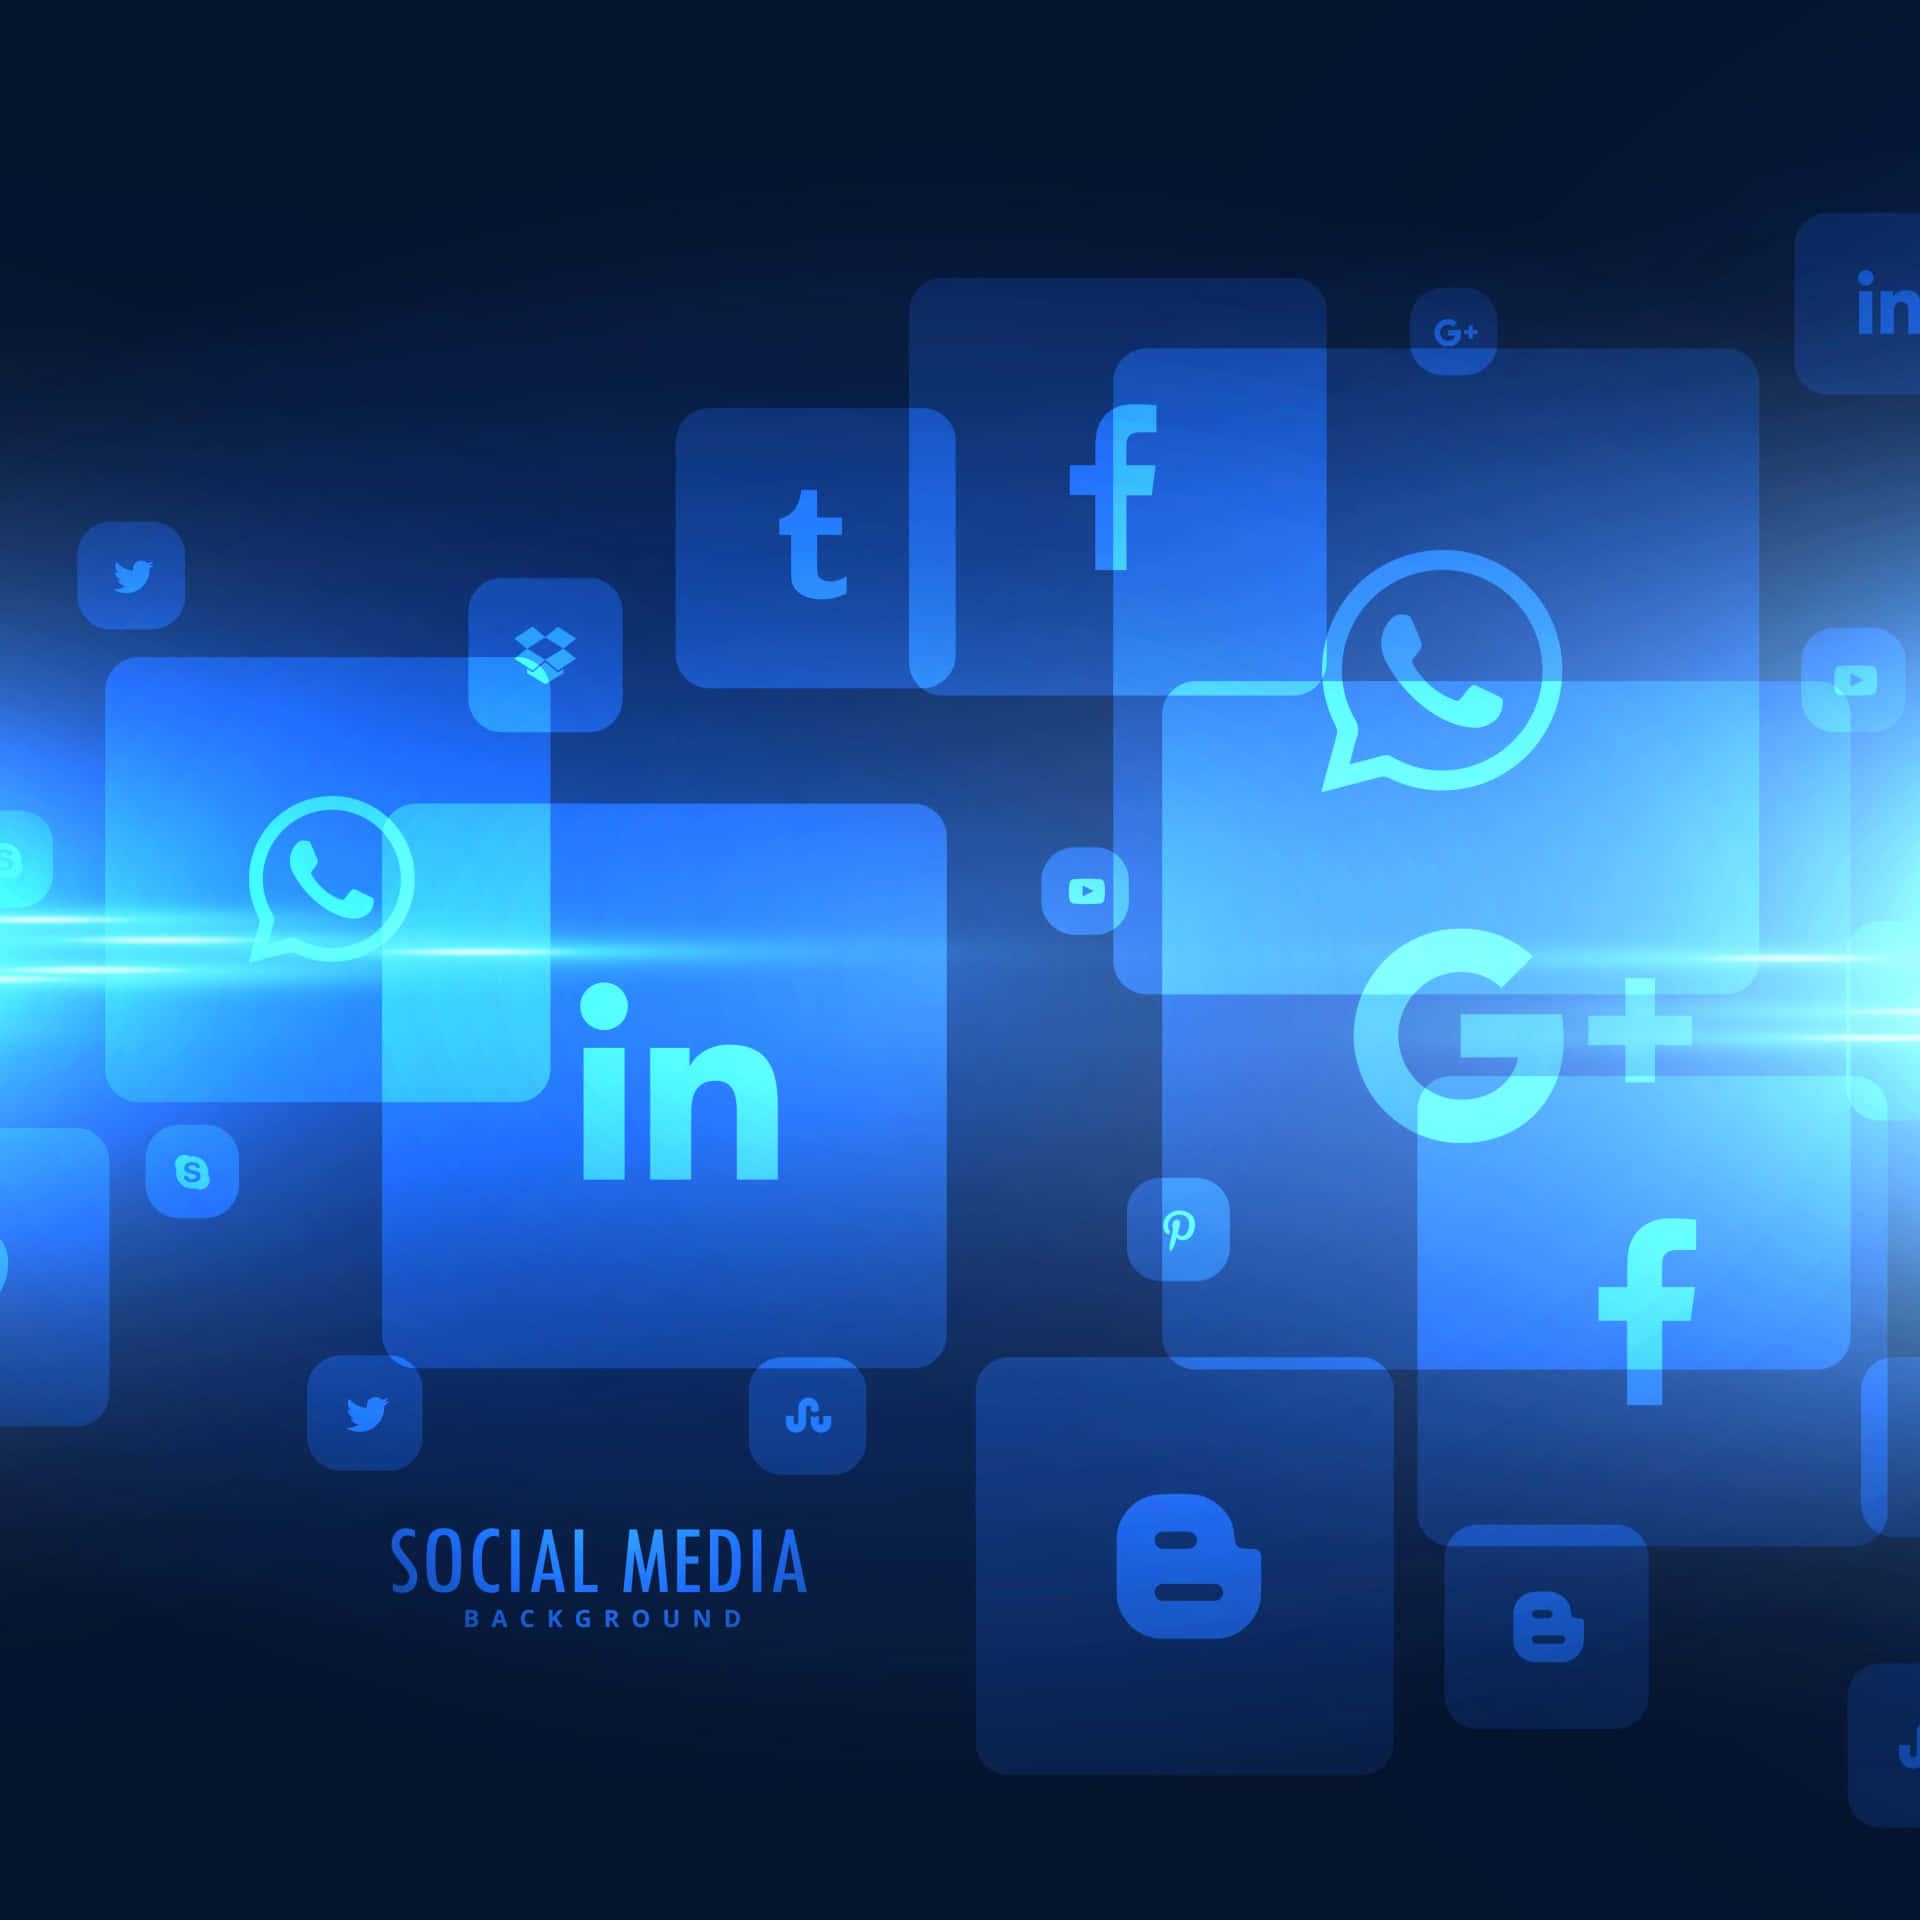 Maximize your reach with social media